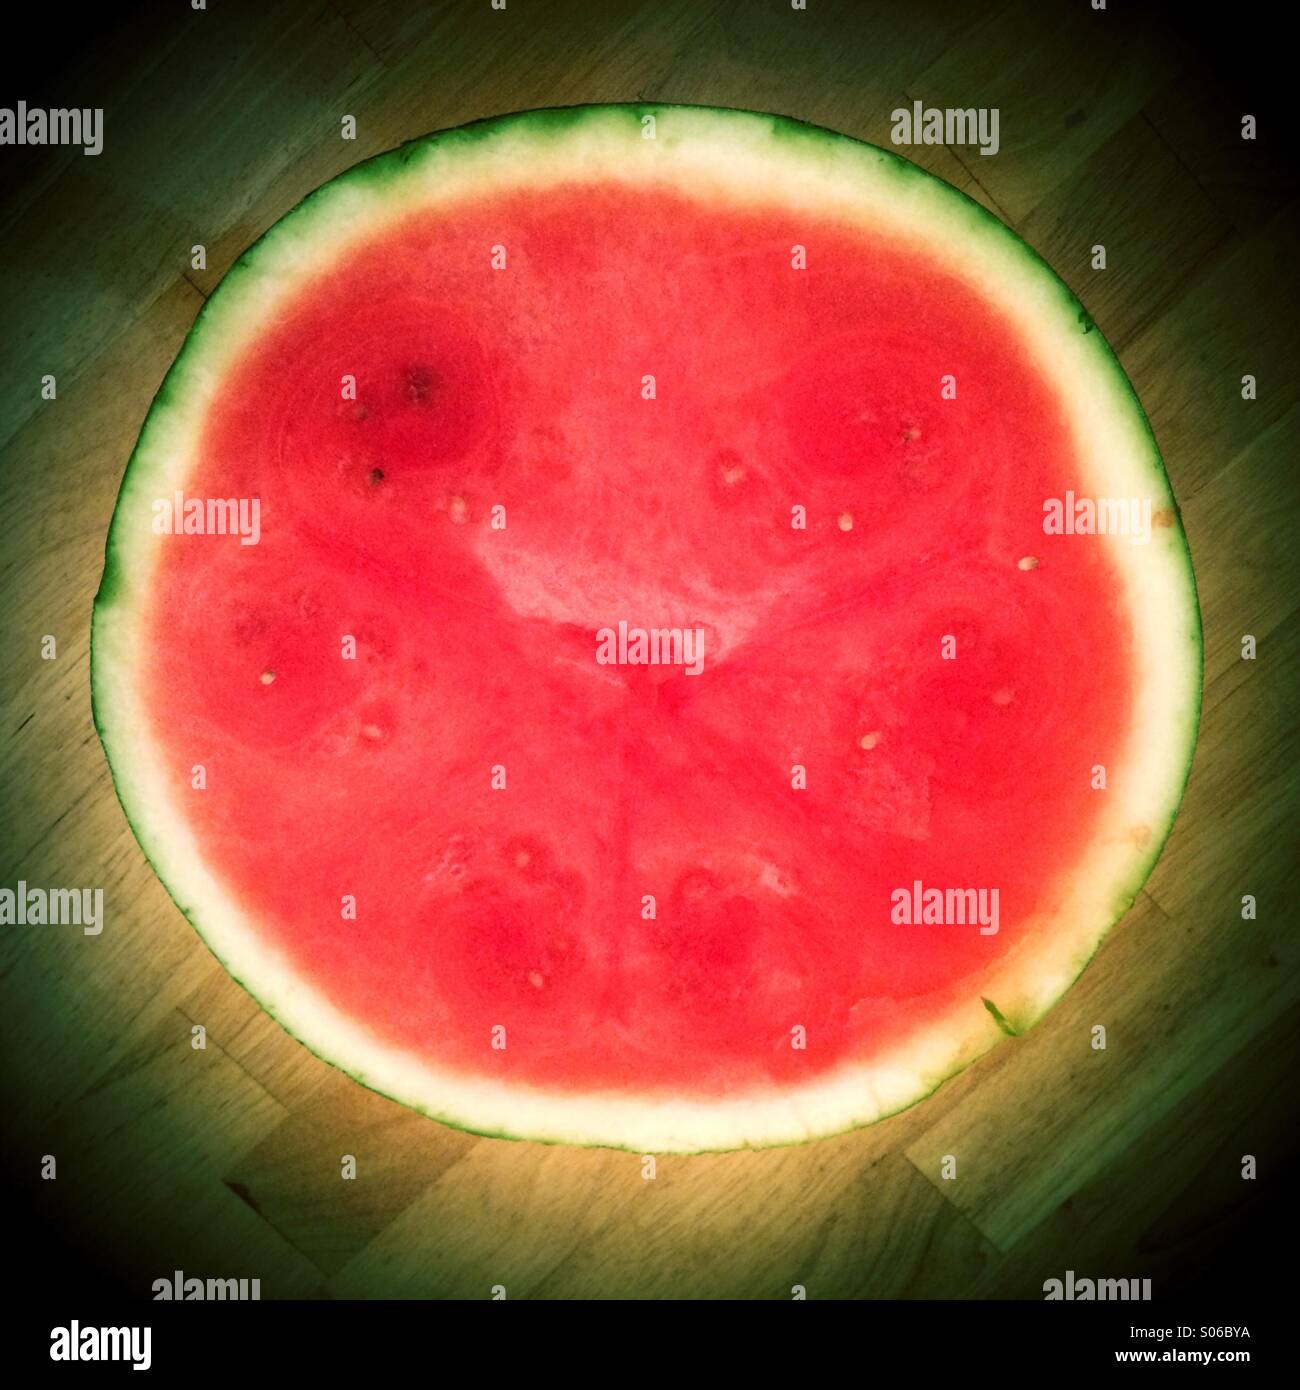 Half a seedless watermelon. Stock Photo